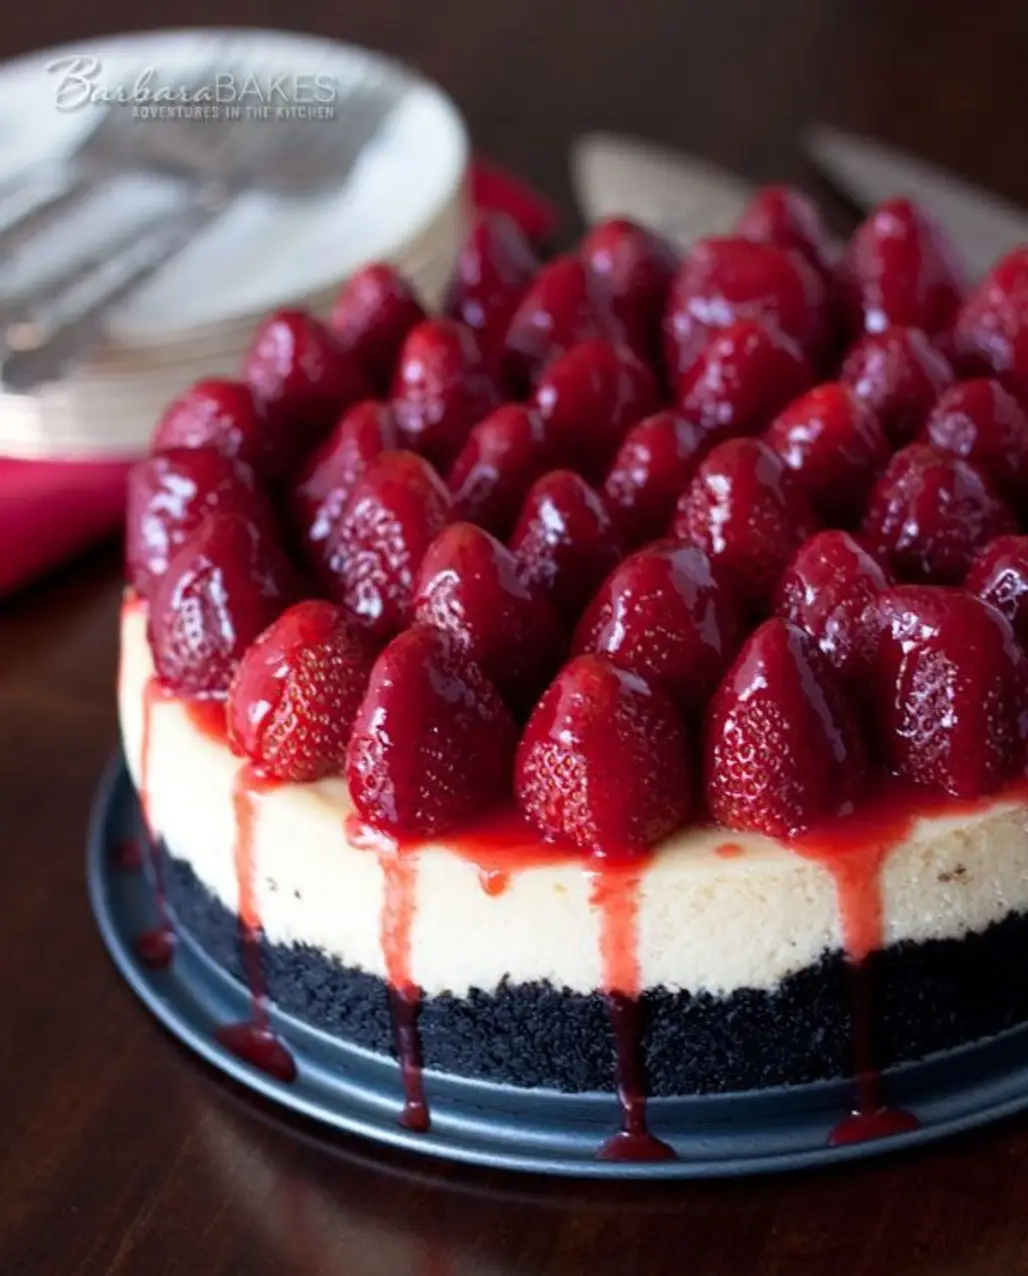 Strawberry-Cheesecake with an Oreo-Crumb Crust